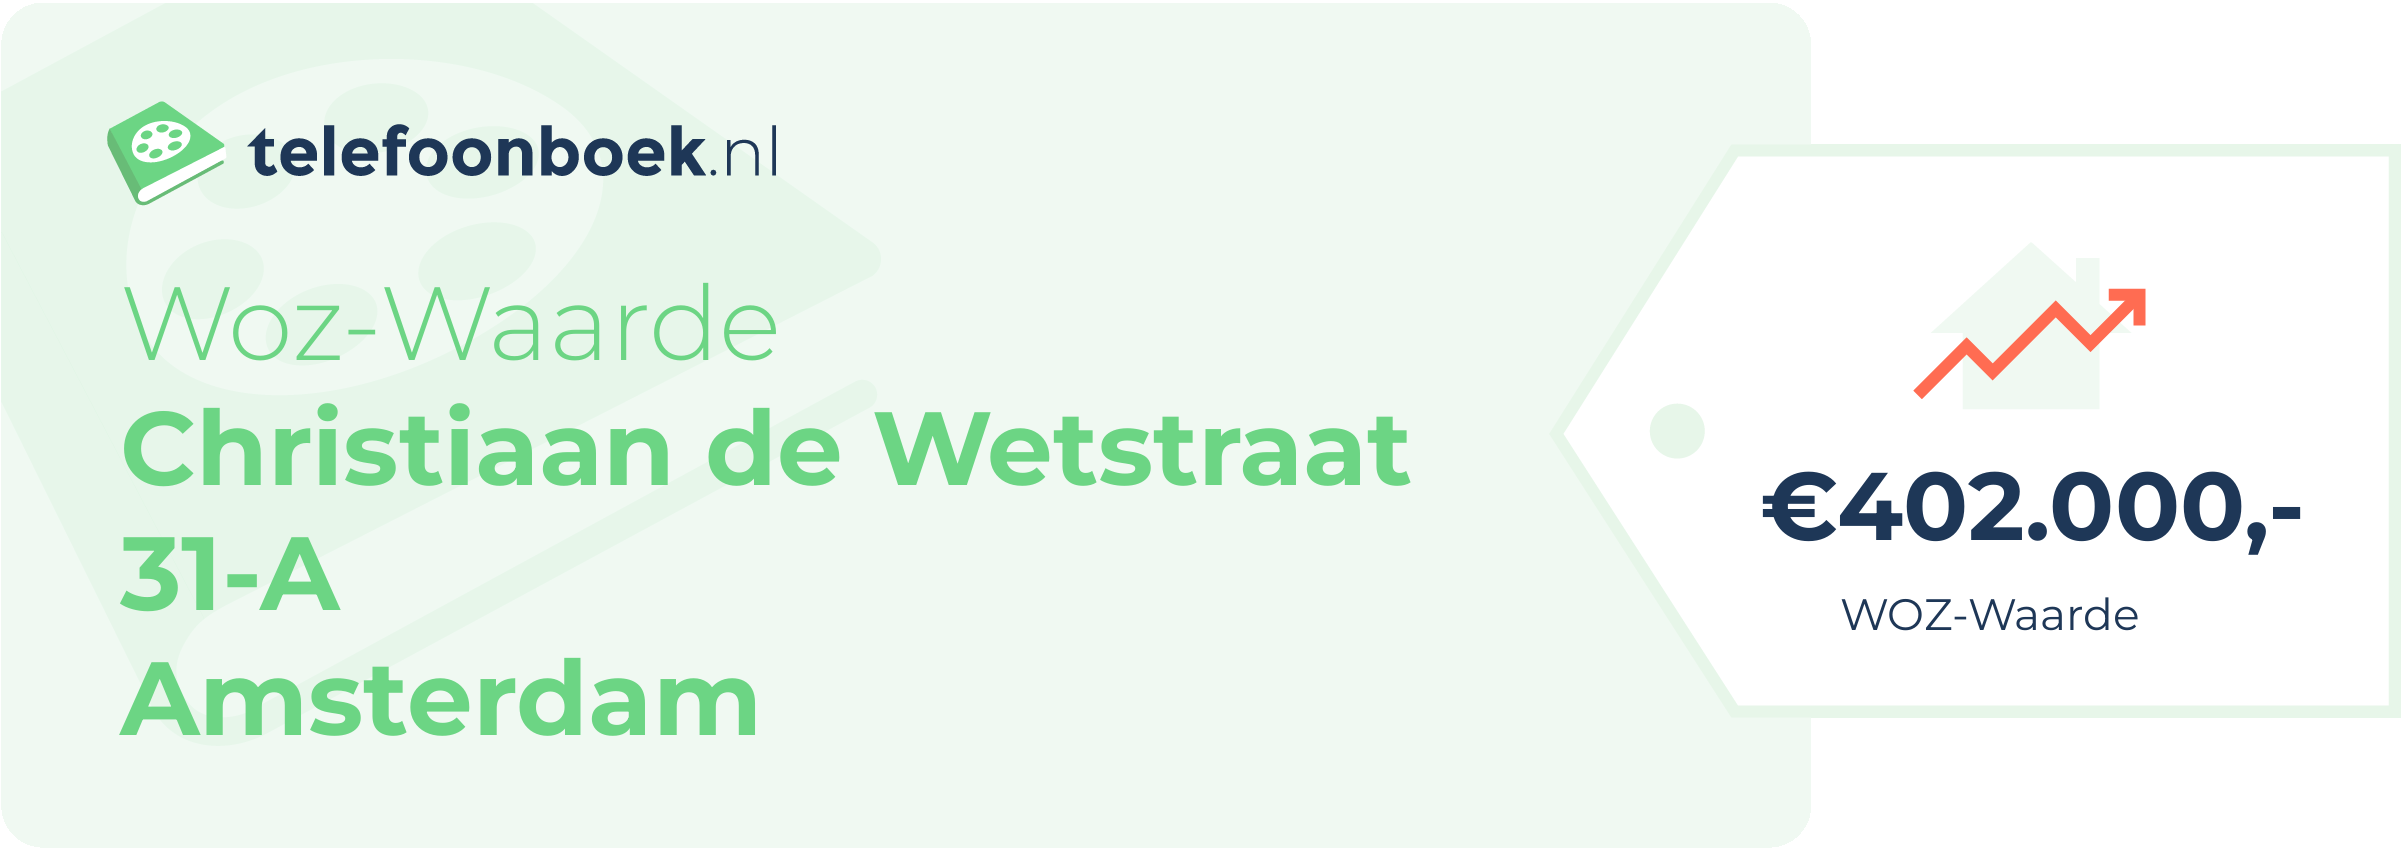 WOZ-waarde Christiaan De Wetstraat 31-A Amsterdam